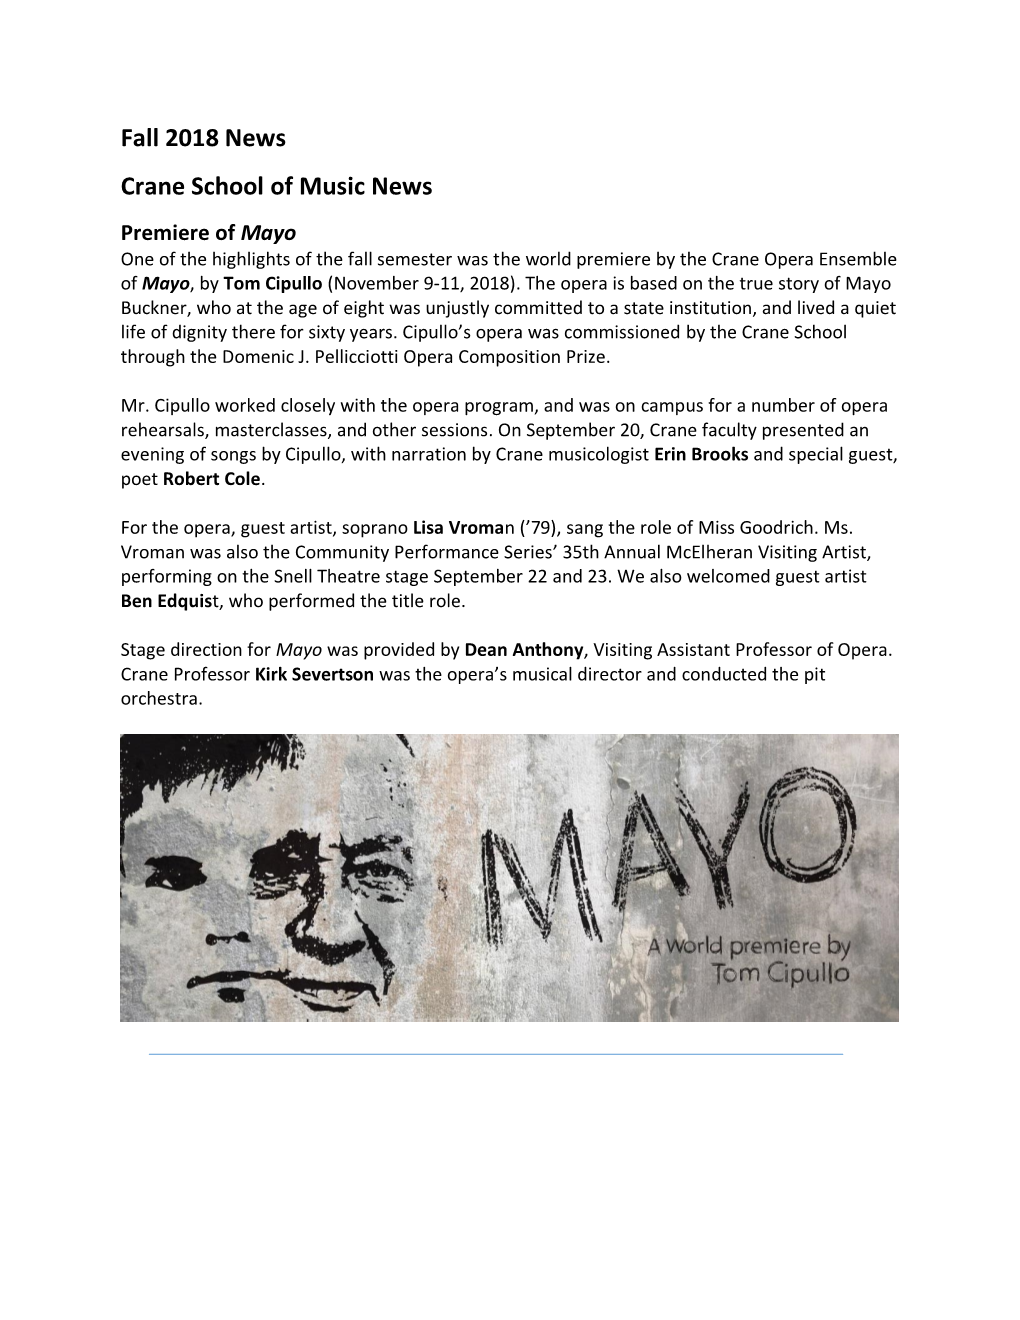 Fall 2018 News Crane School of Music News